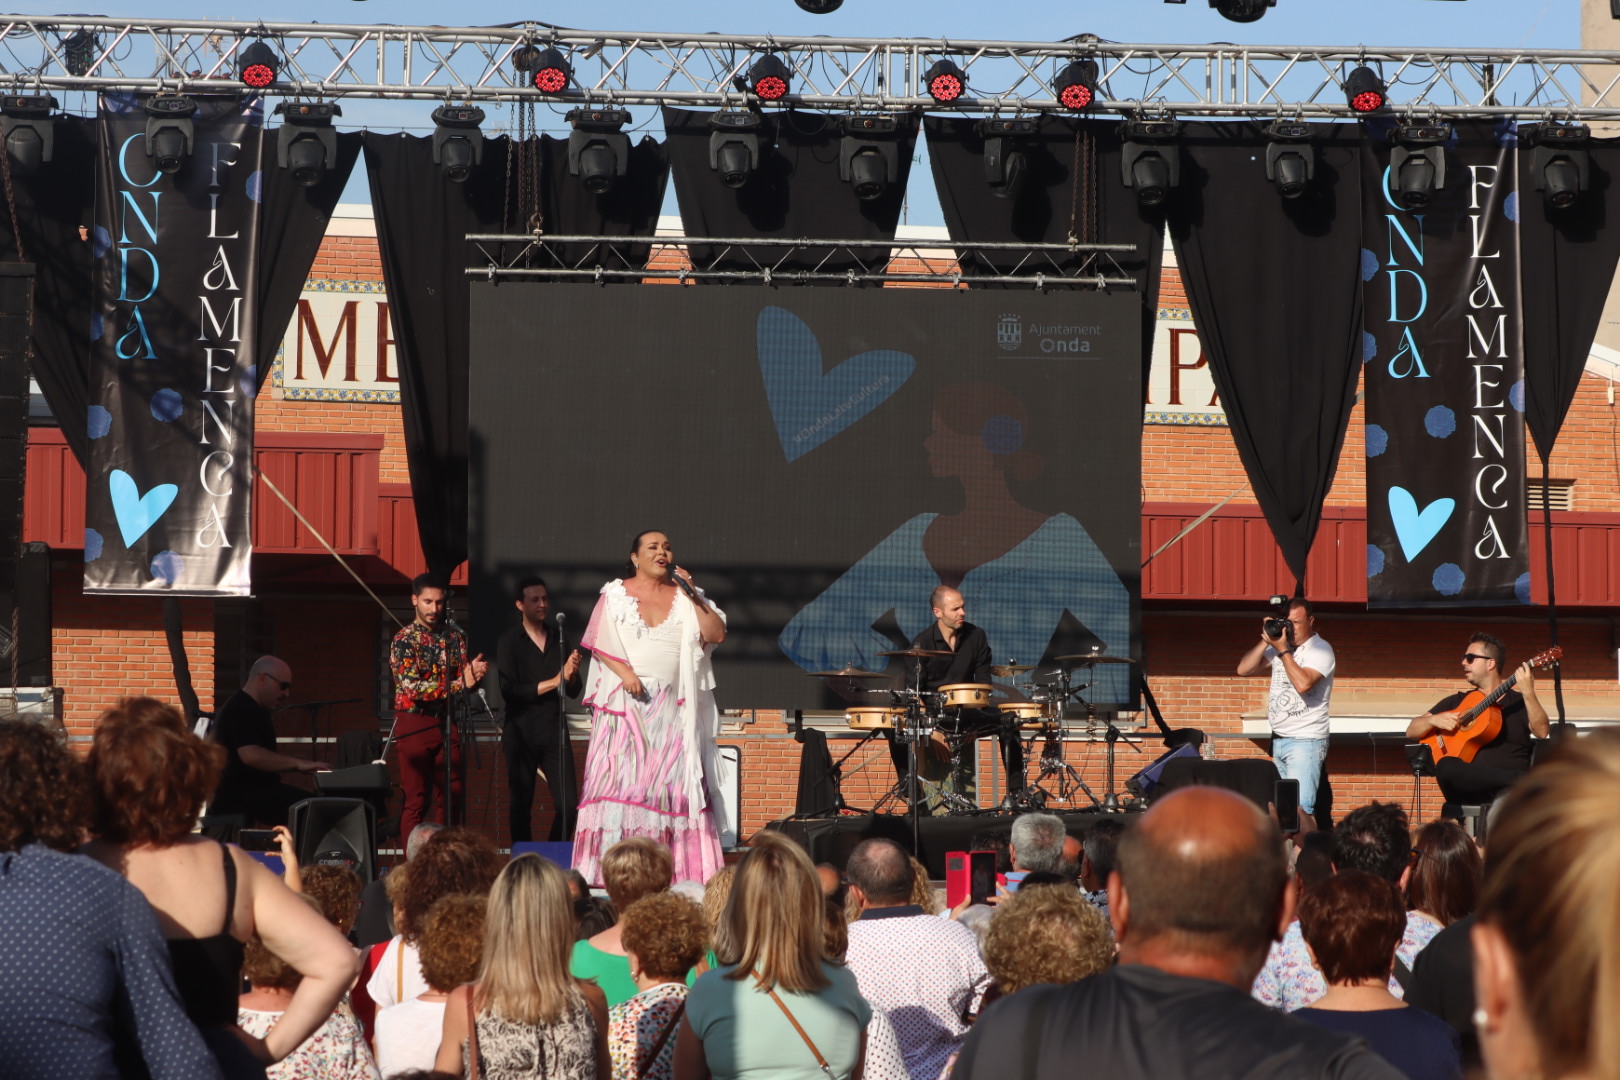 Falete despide con éxito un fin de semana completo con el gran festival Onda Flamenca